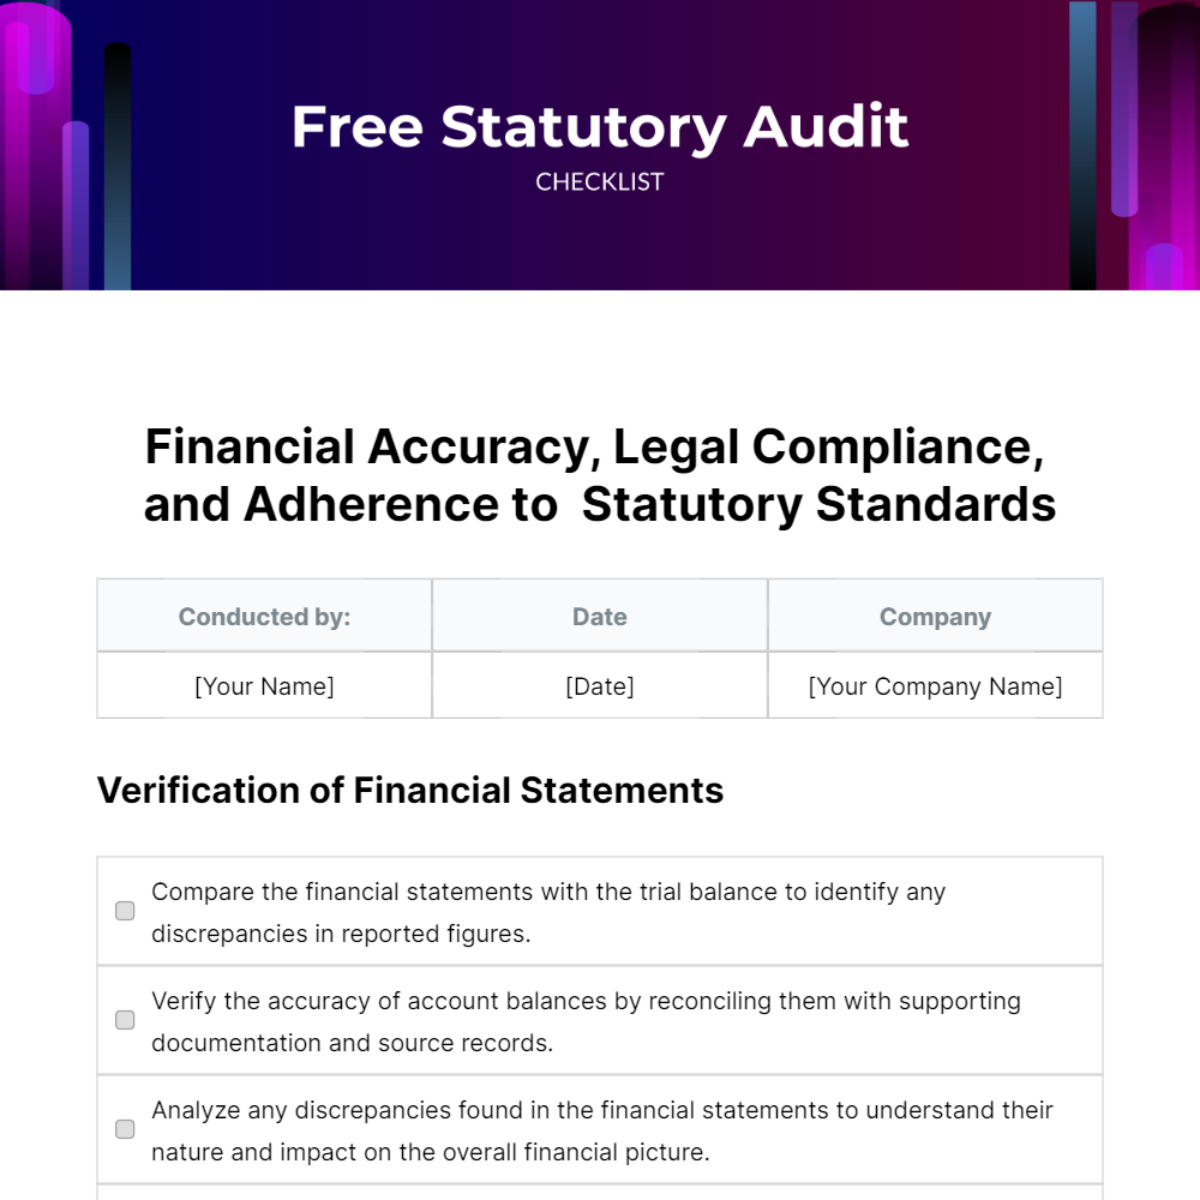 Free Statutory Audit Checklist Template